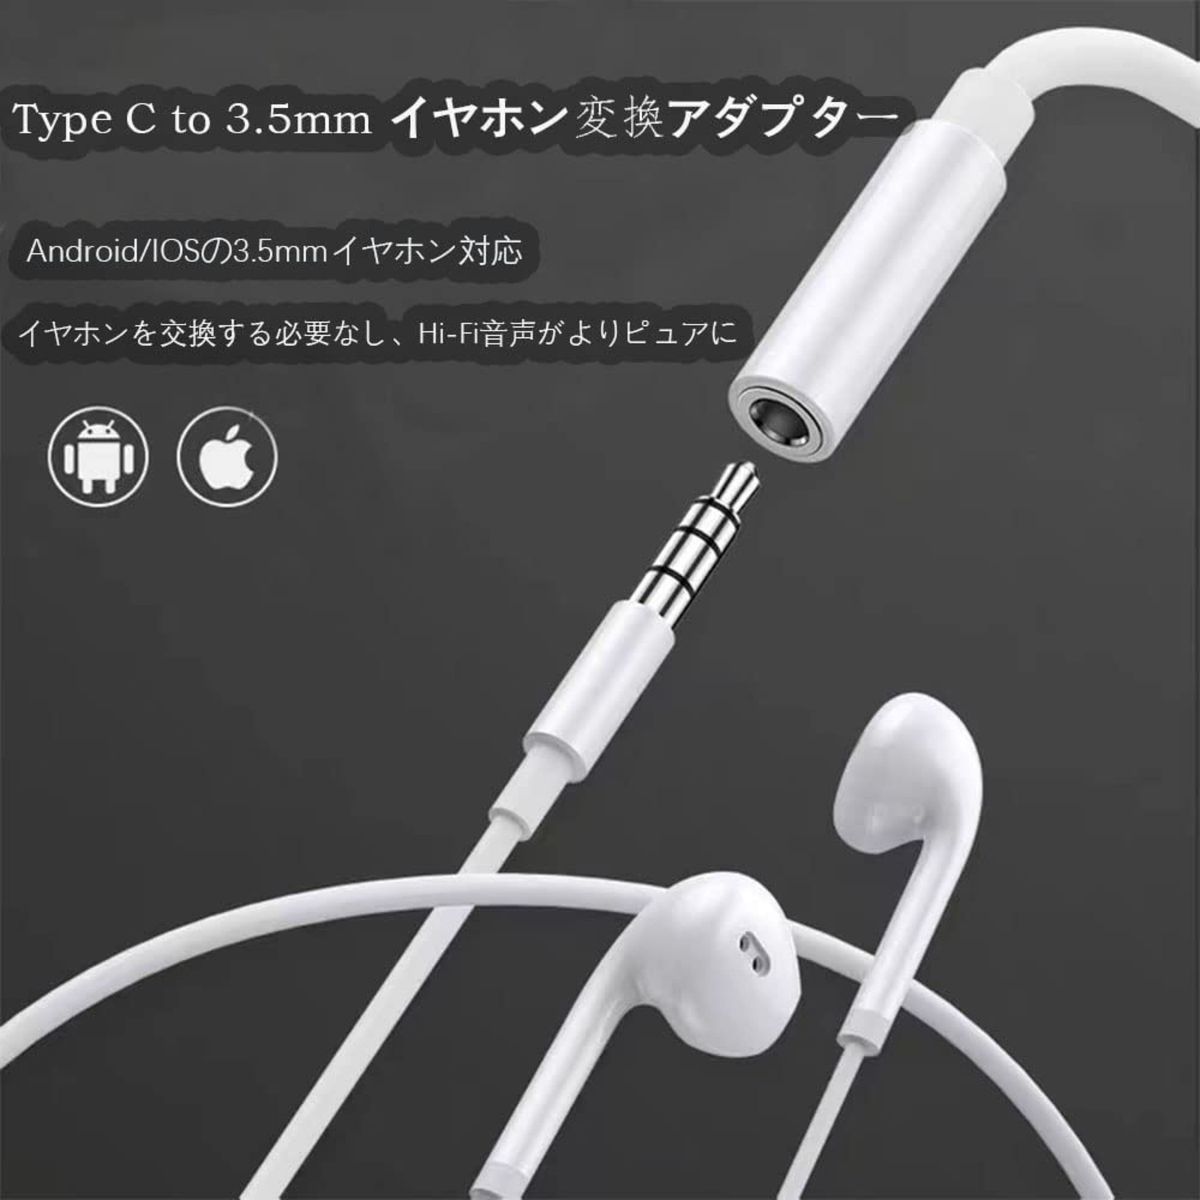 Type C to 3.5MM イヤホン変換ケーブル イプC 3.5mm対応 音声通話/音量調節/音楽 iPad Pro 11 